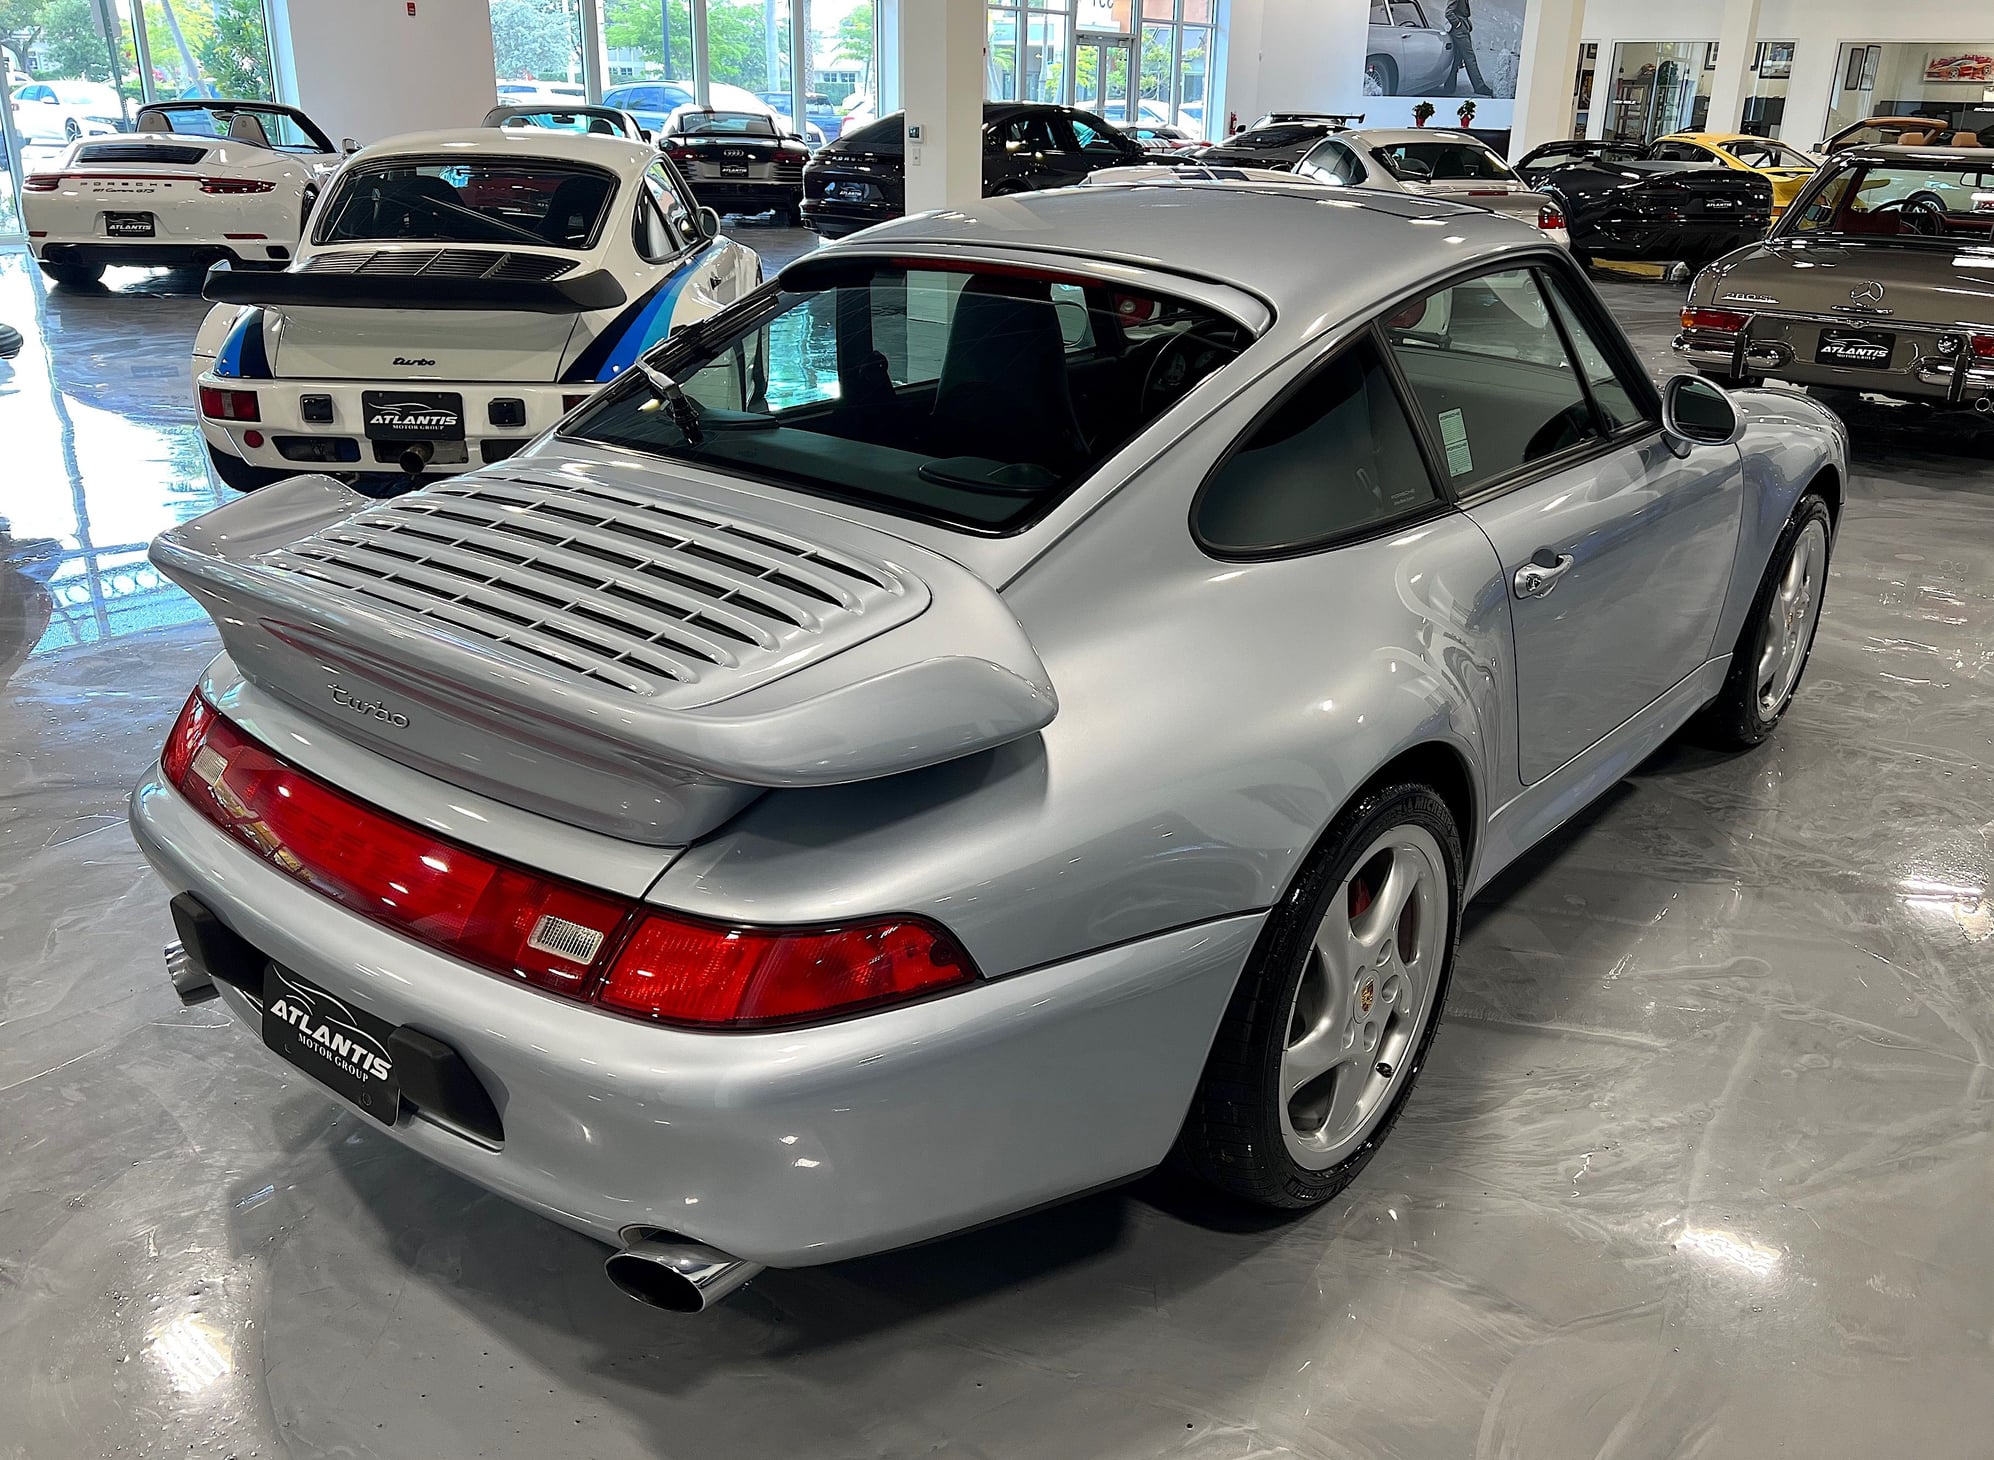 1996 Porsche 911 - 1996 Porsche 993 Turbo with 18,900 miles. - Used - Boca Raton, FL 33431, United States